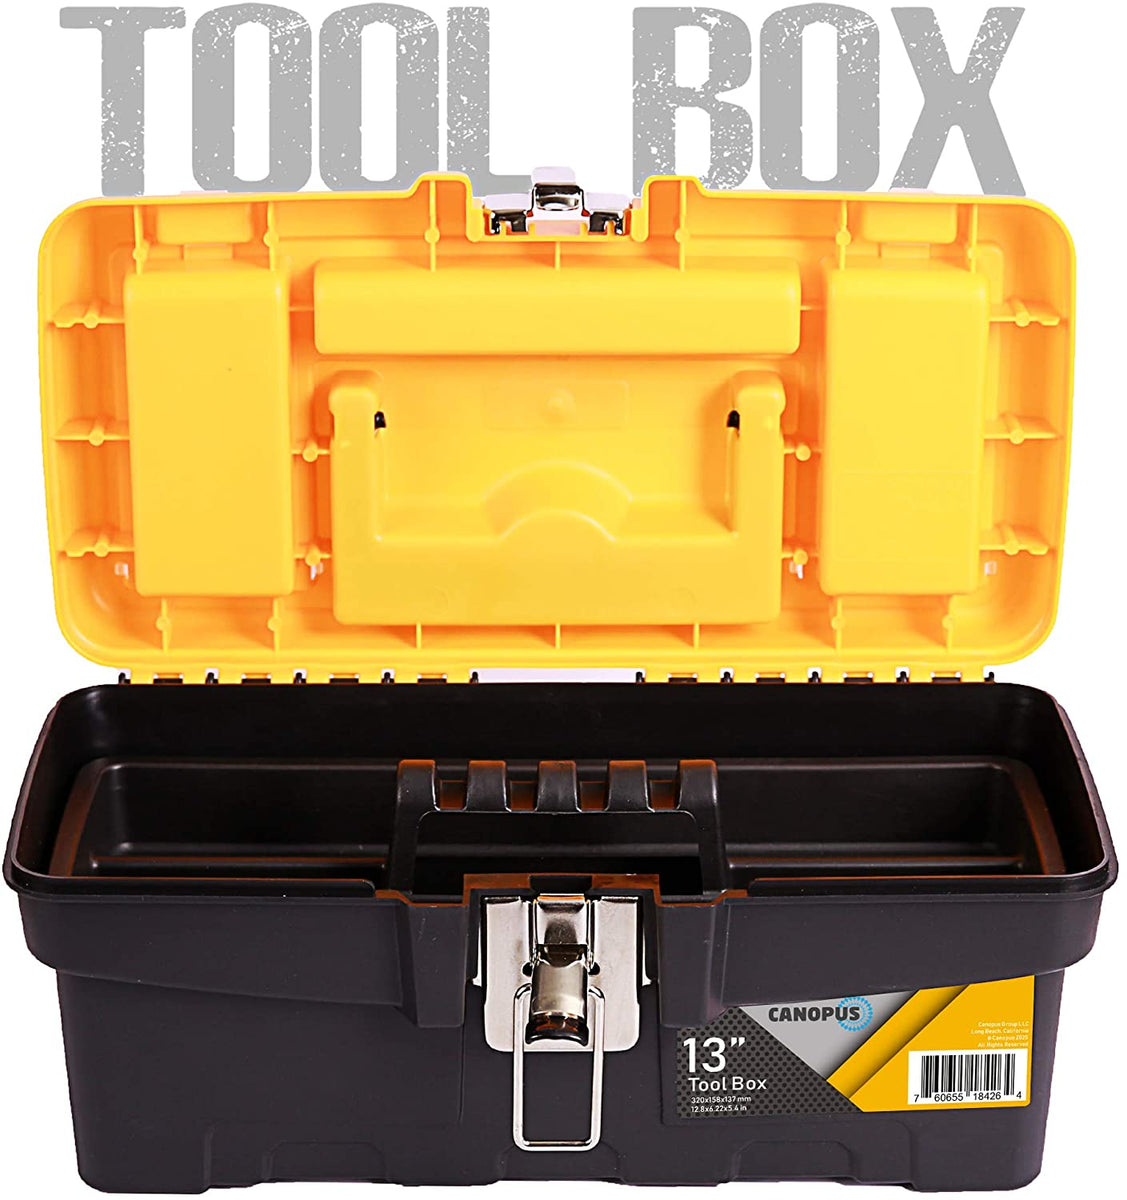 Parts, Tool Boxes – General Purpose